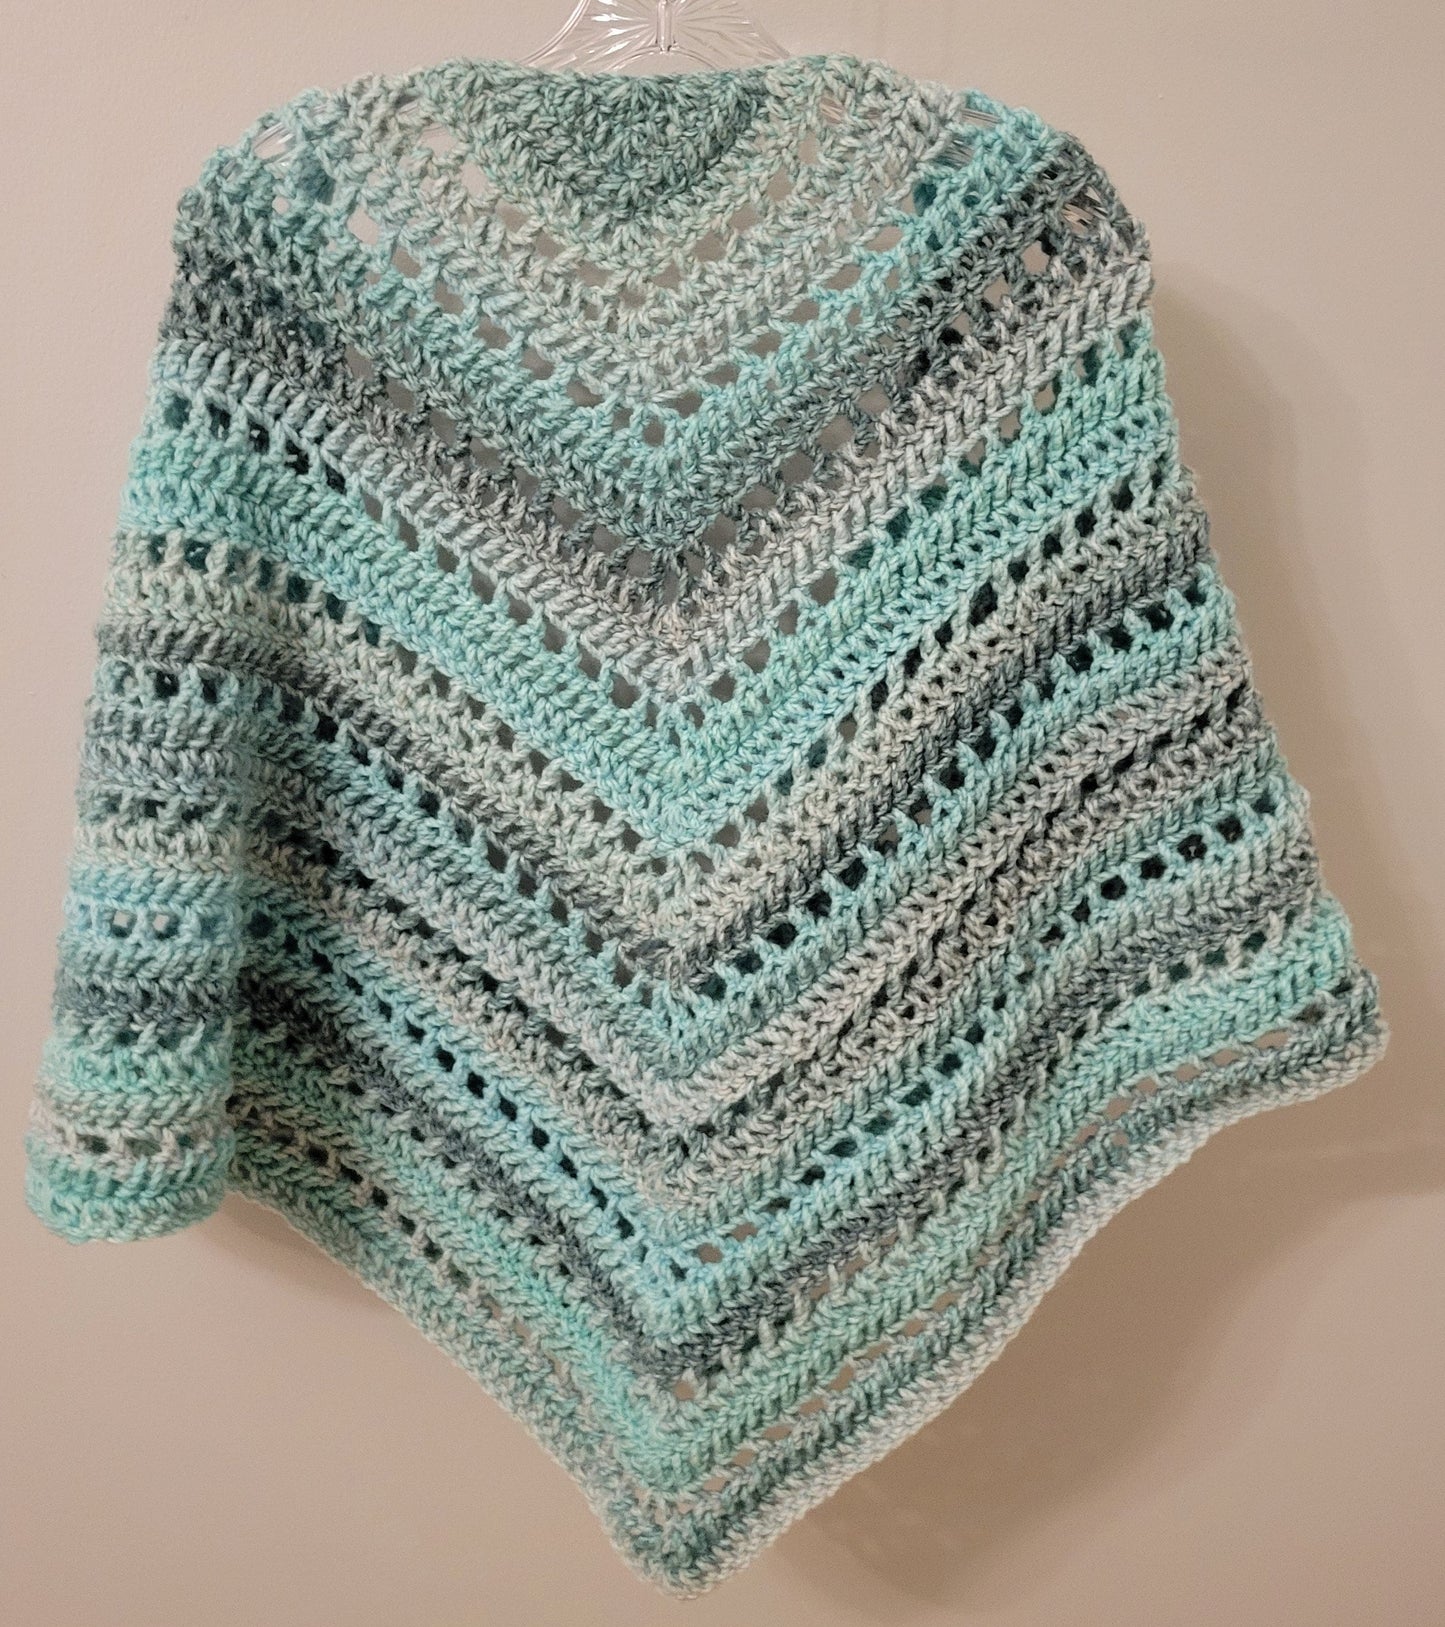 Hand-crocheted shawl